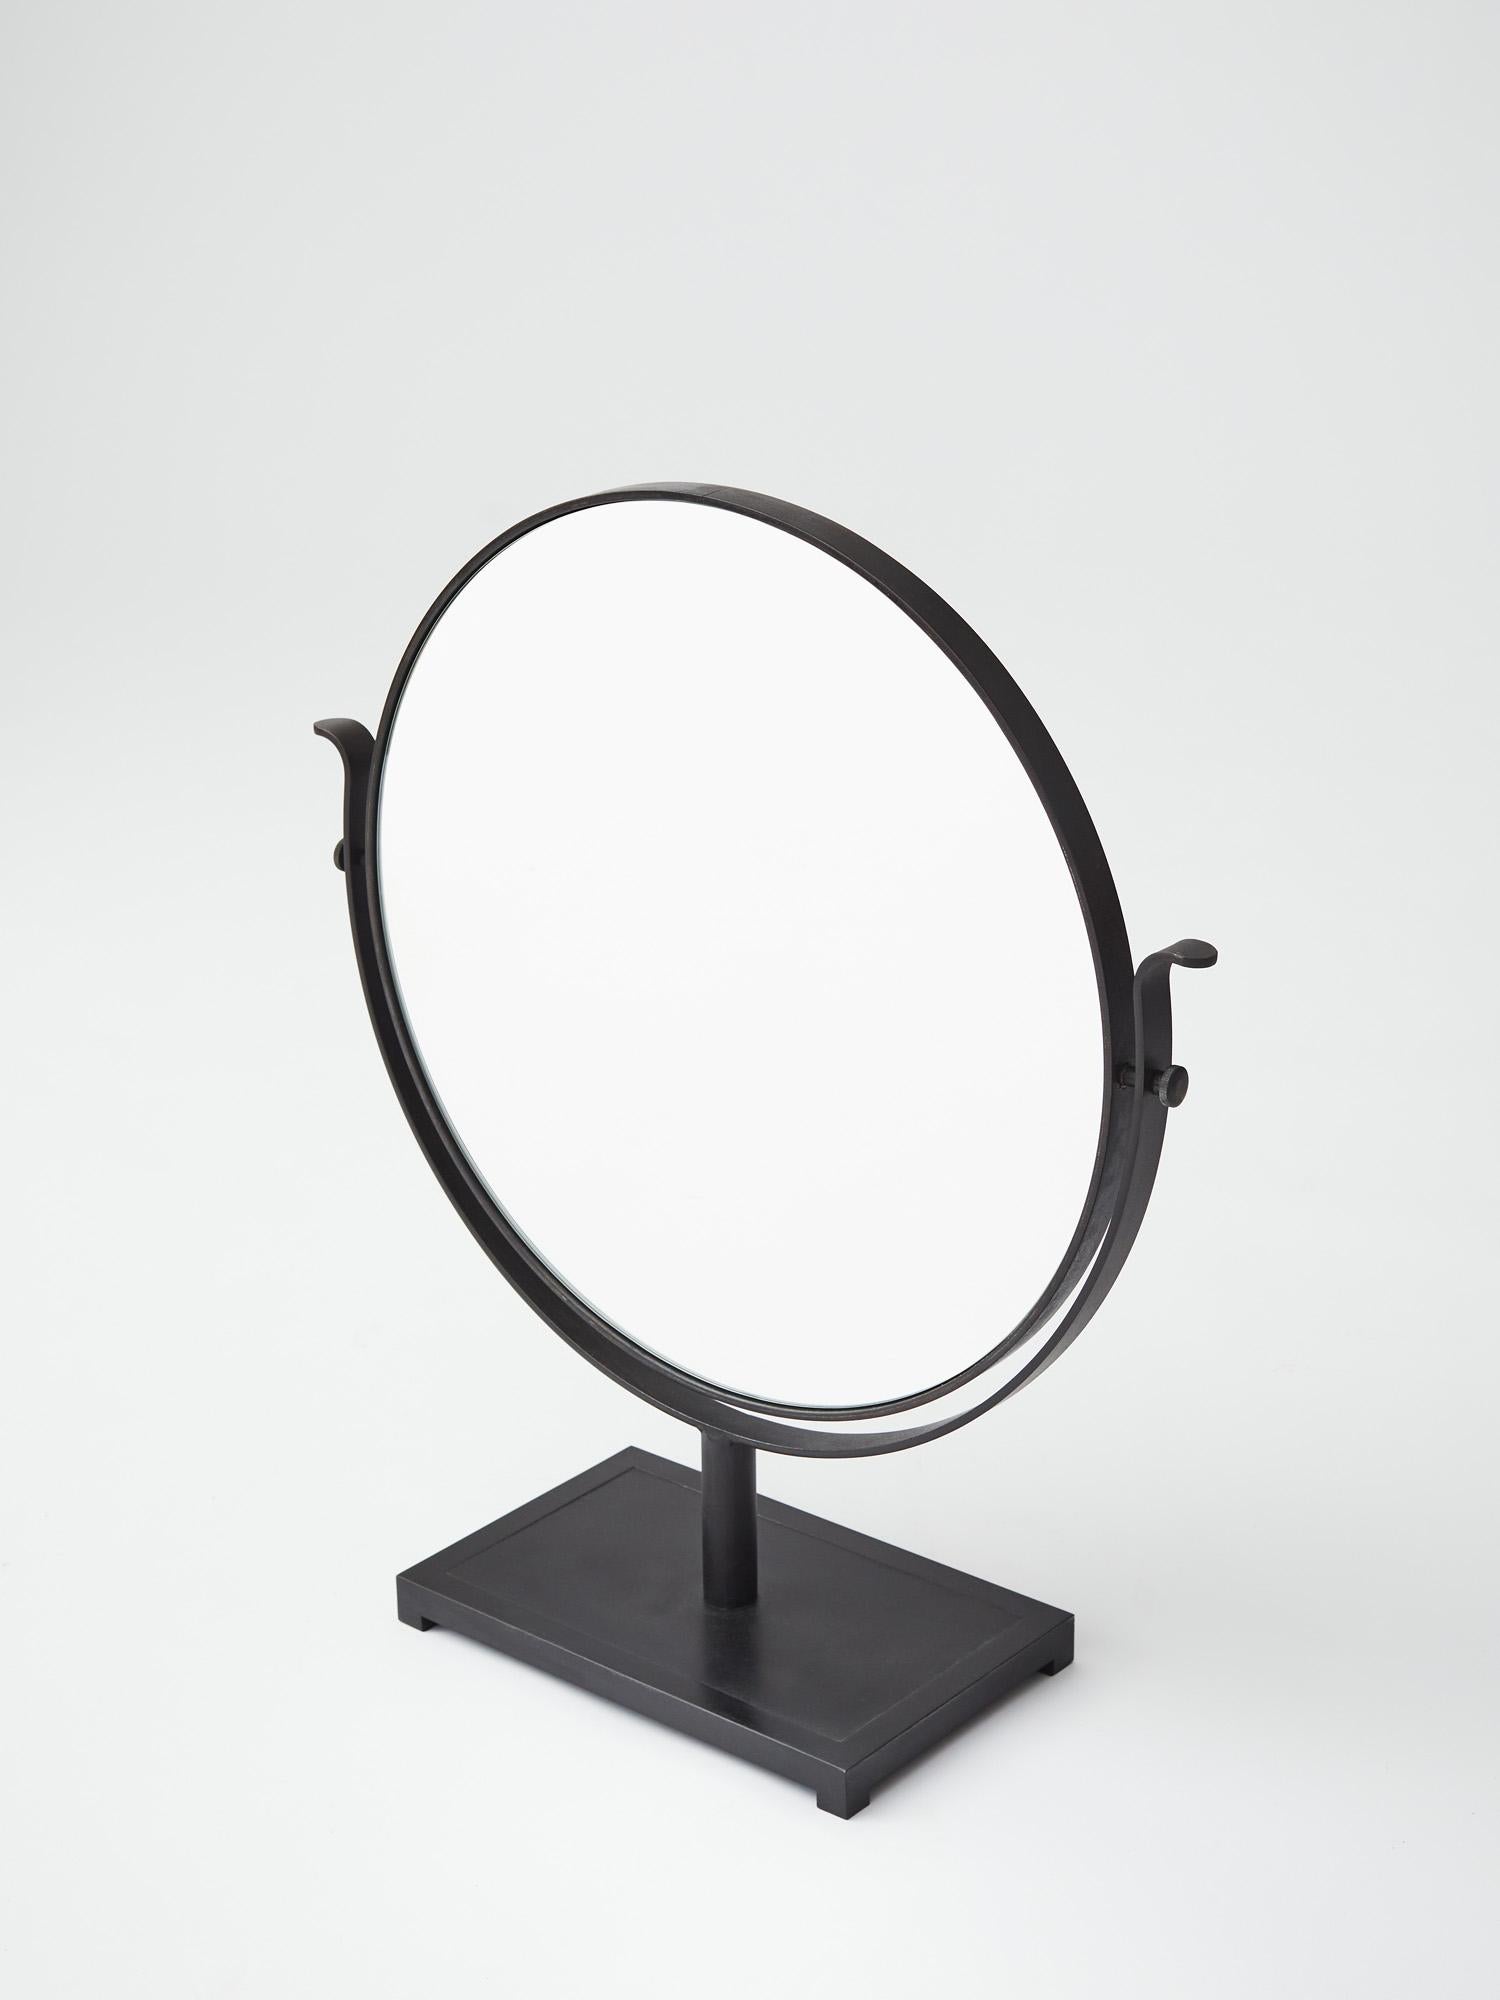 Resize table mirror in steel burned in linseed oil. Designed by Lousie Liljencrantz, Interior Designer based in Stockholm, Sweden.

Made in Stockholm, Sweden.